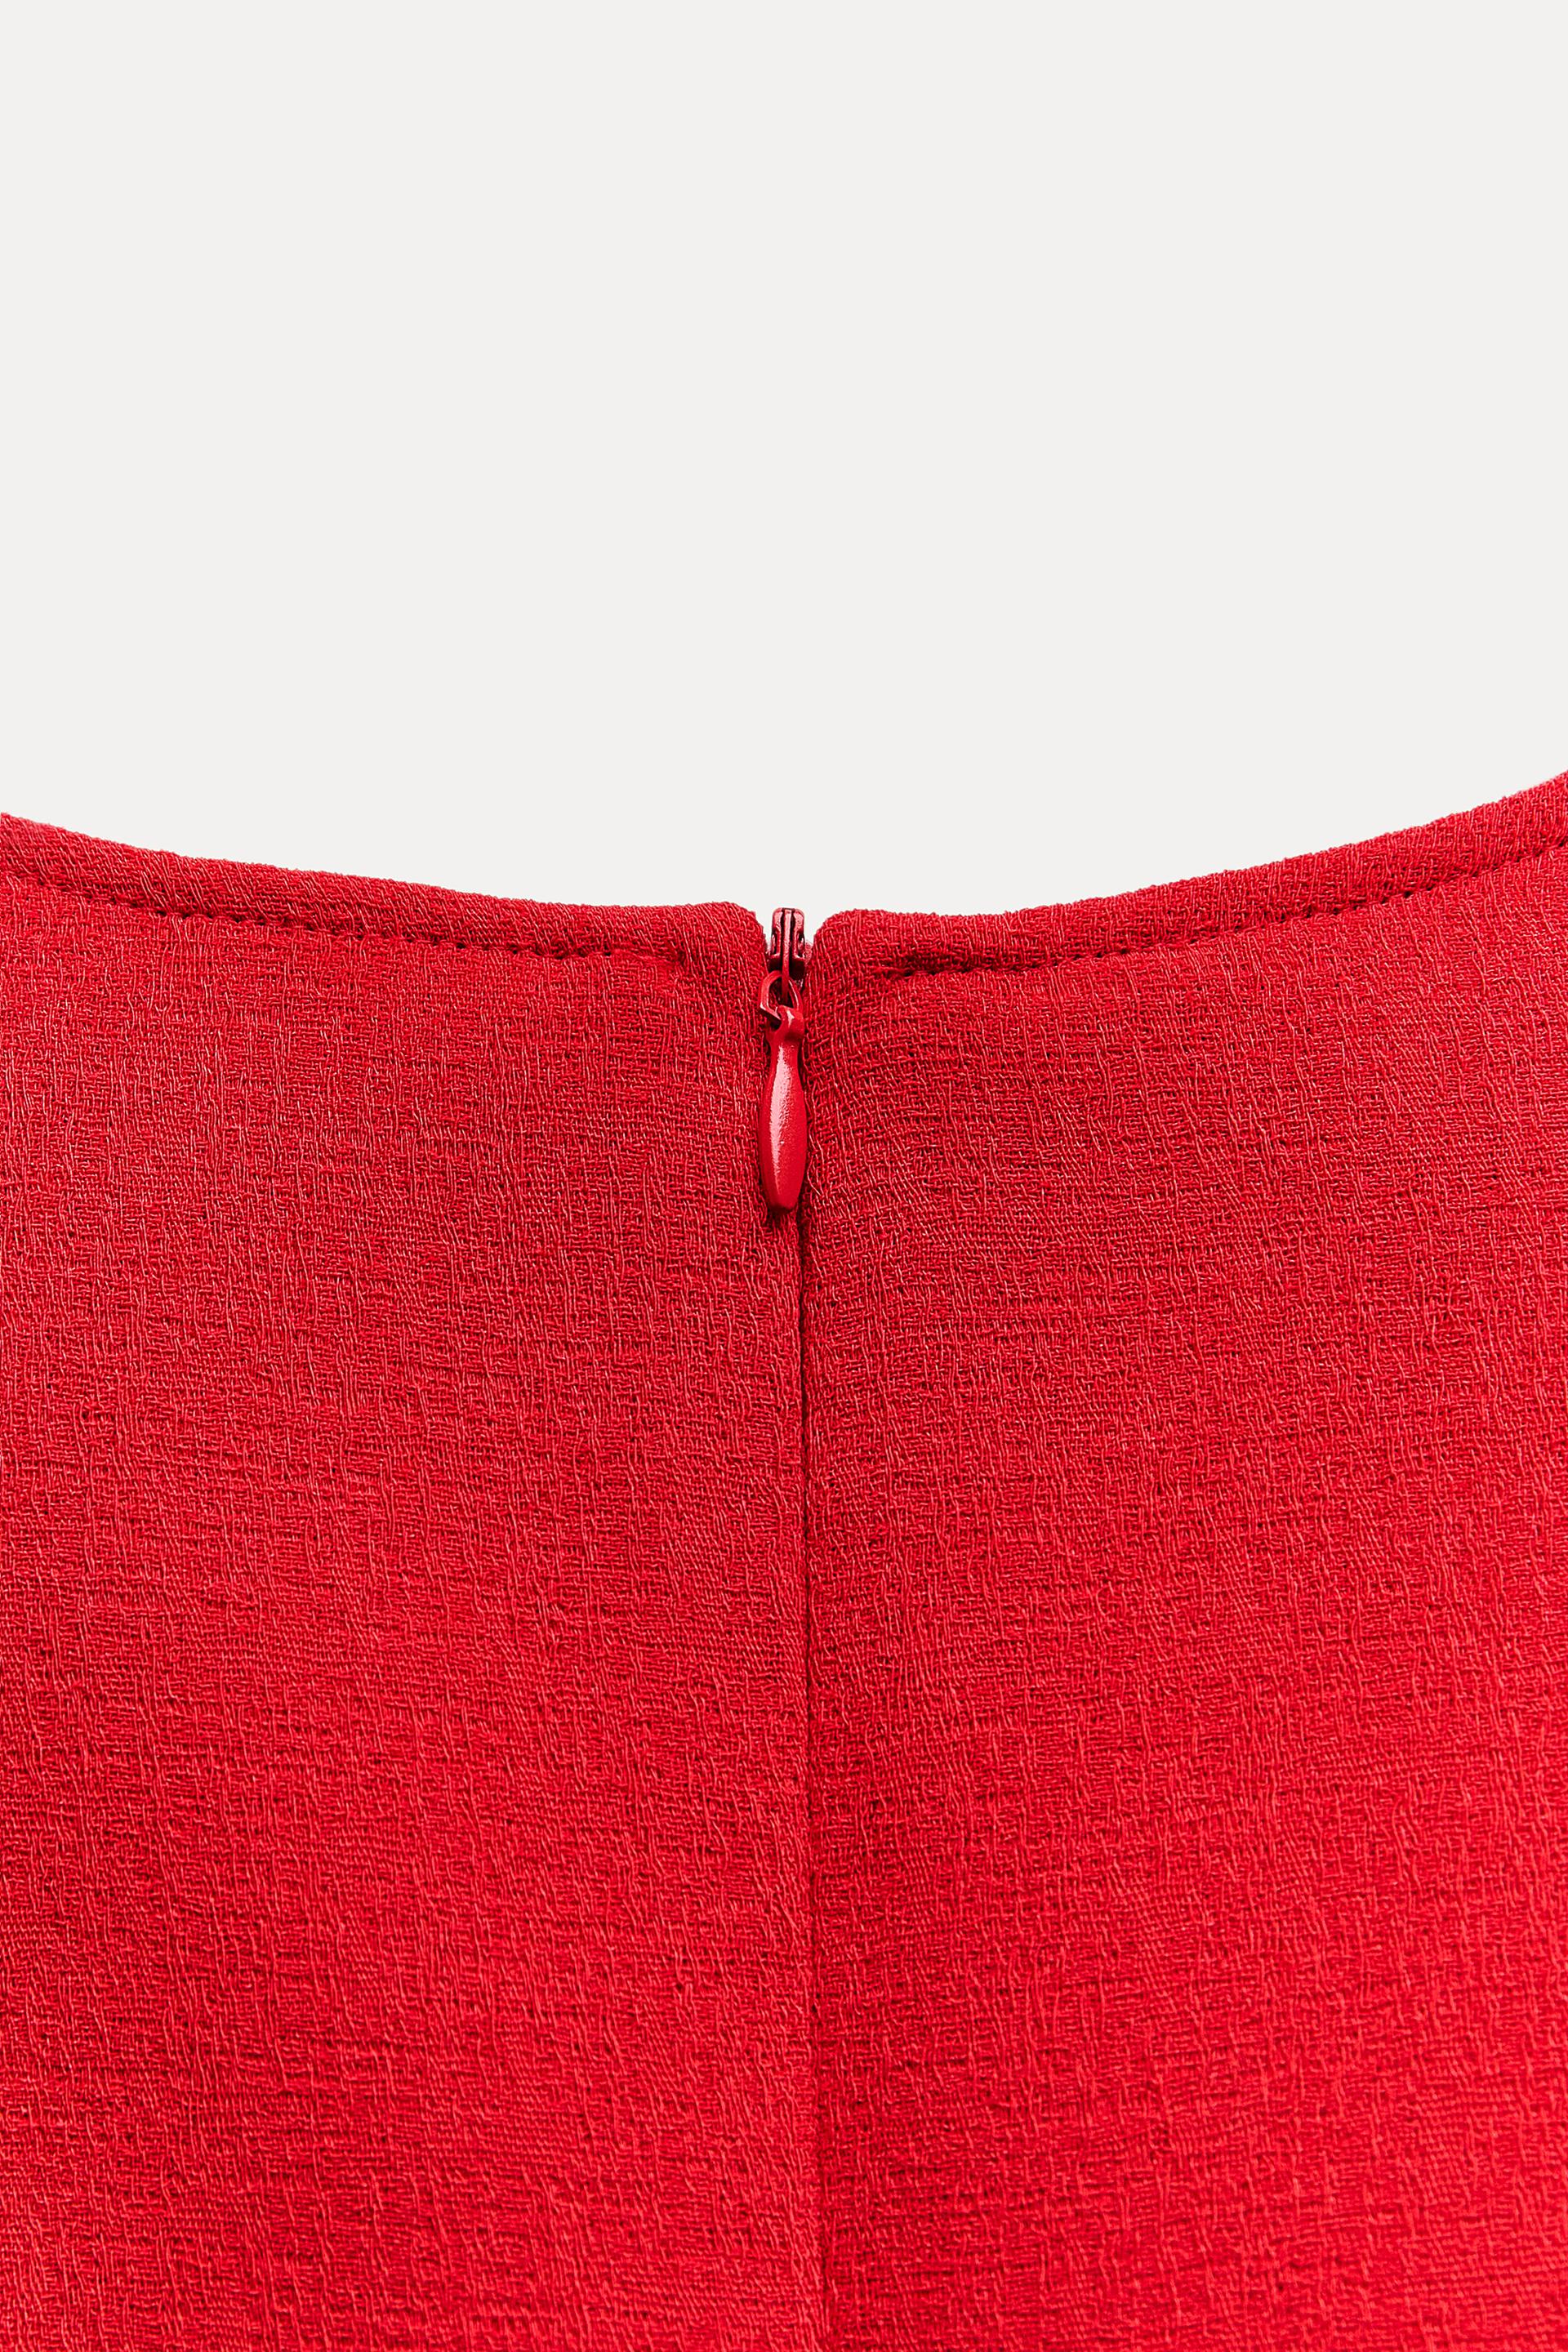 COLO® - ℛed -- robe-zara  Tenue élégante, Collant rouge, Robe rouge zara